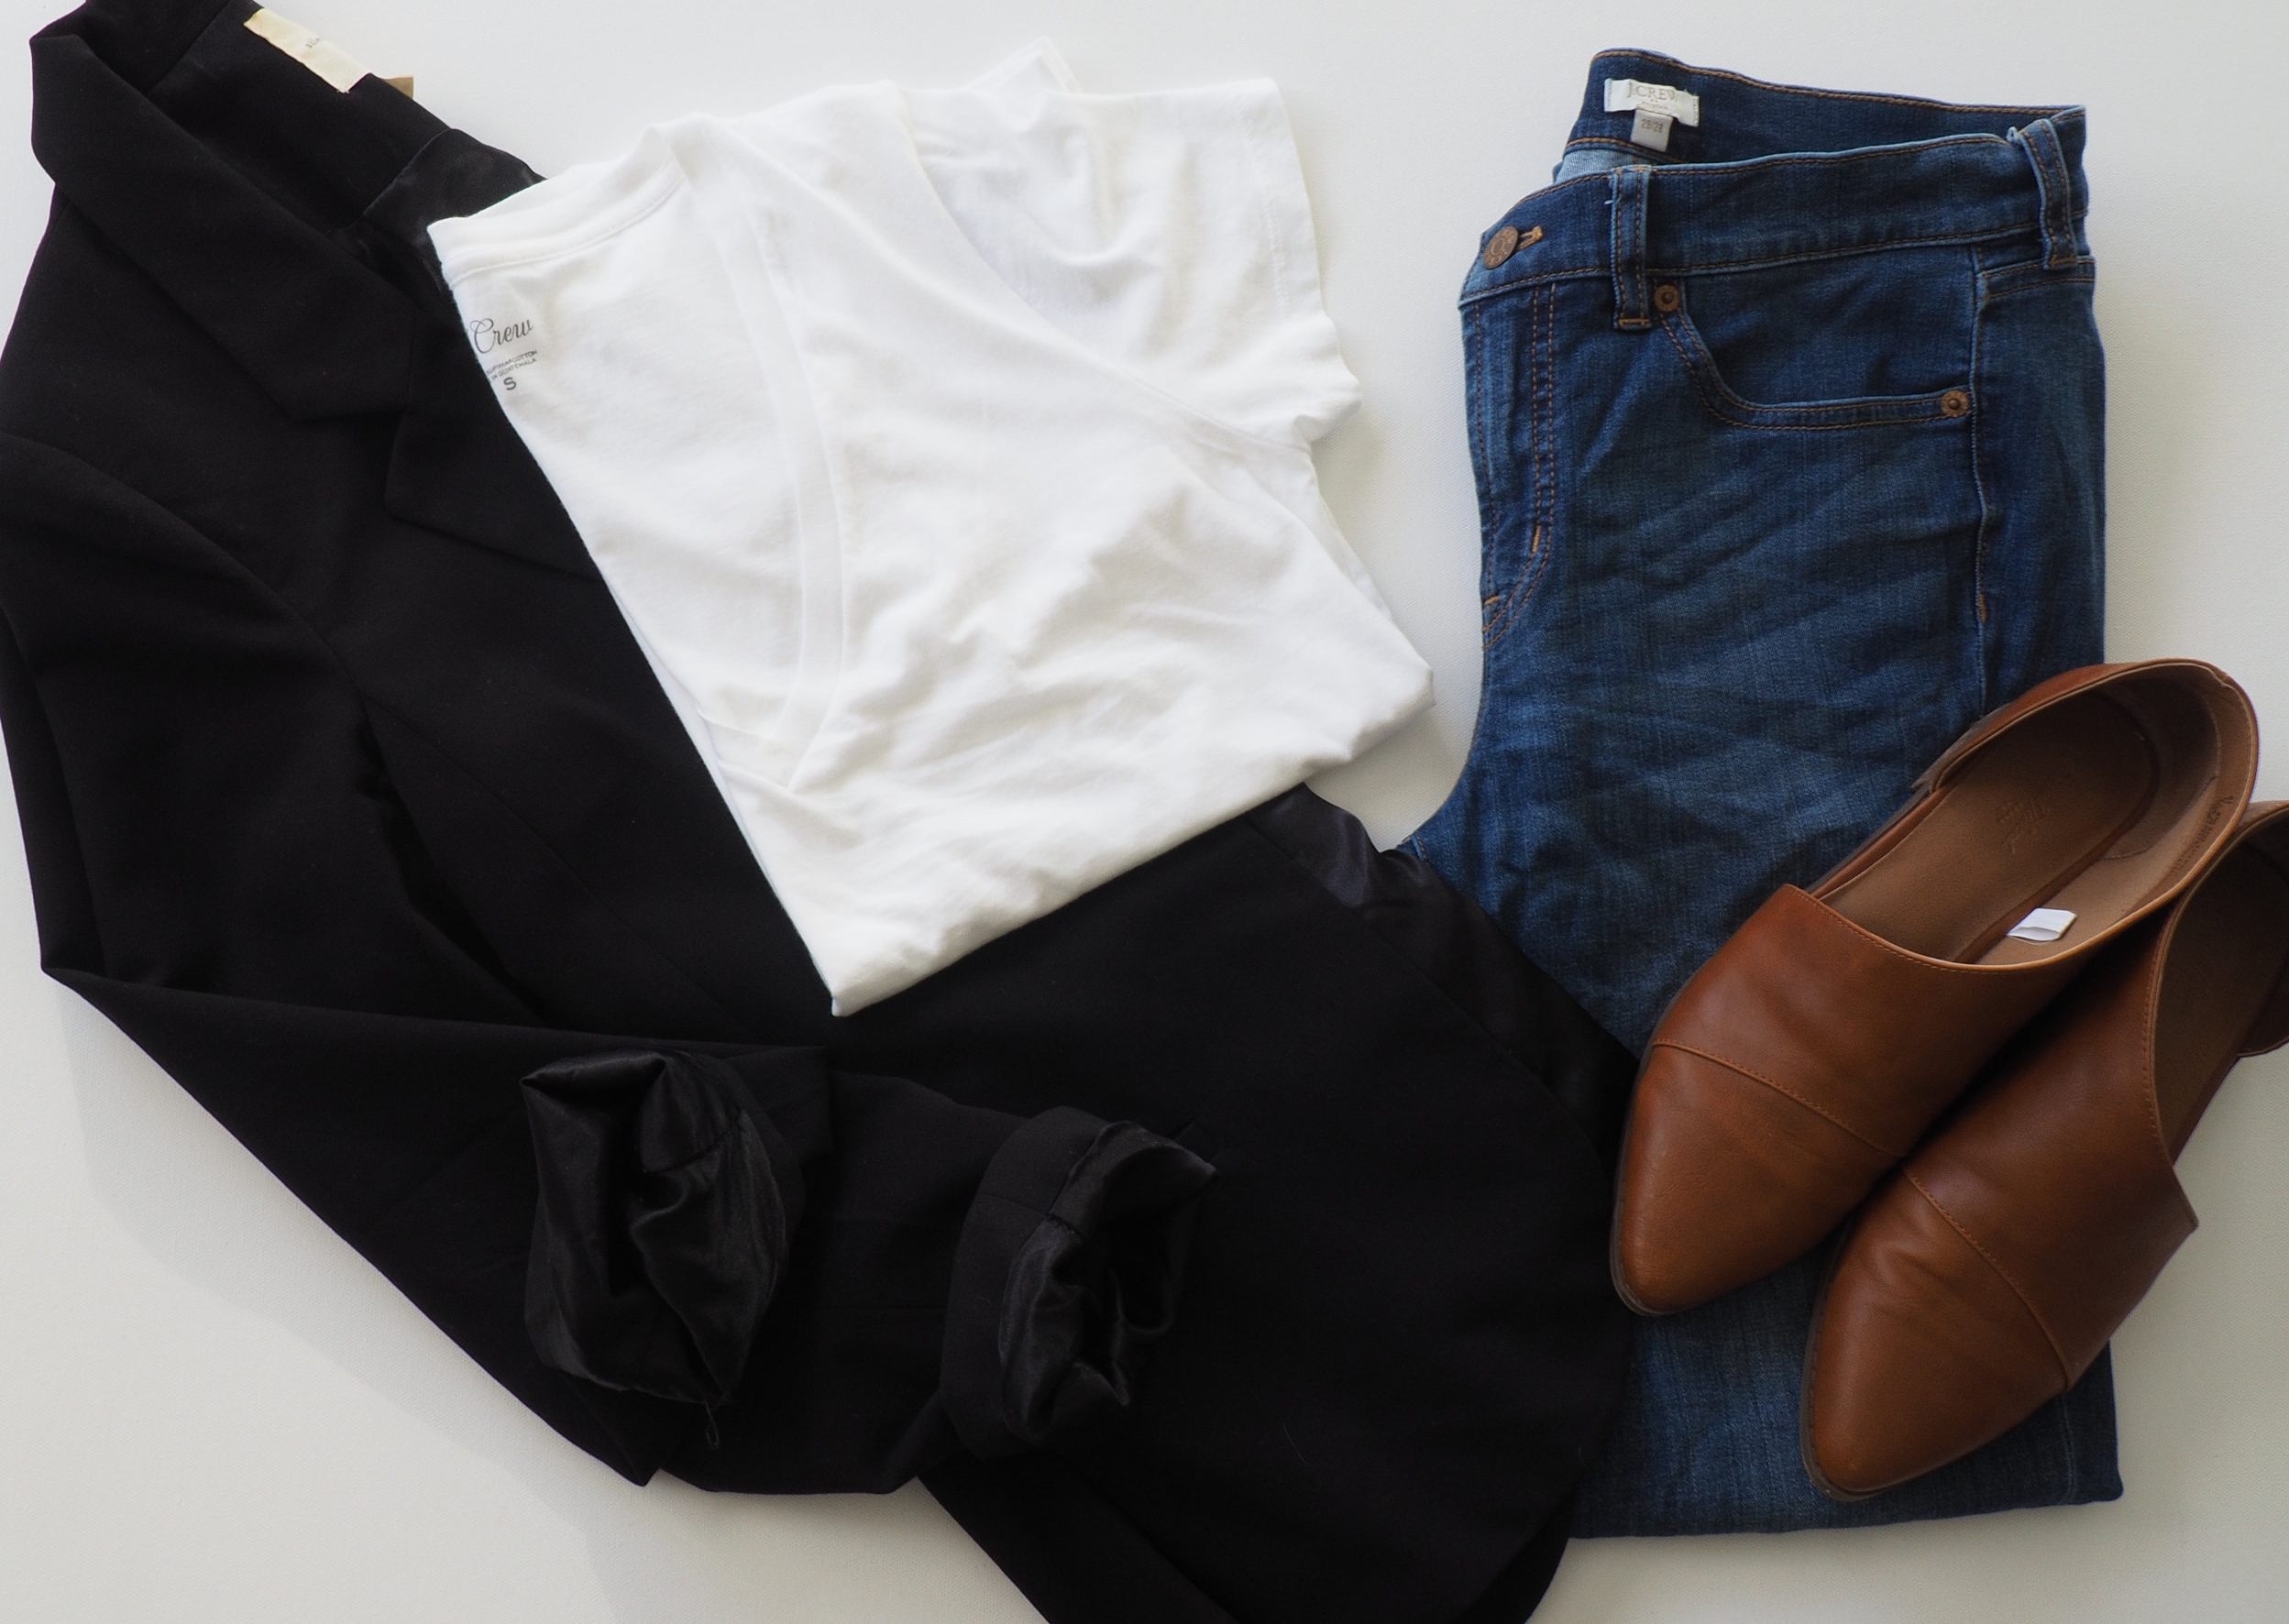  Blazer  (Similar)  |  T Shirt  |  Jeans  |  Booties  